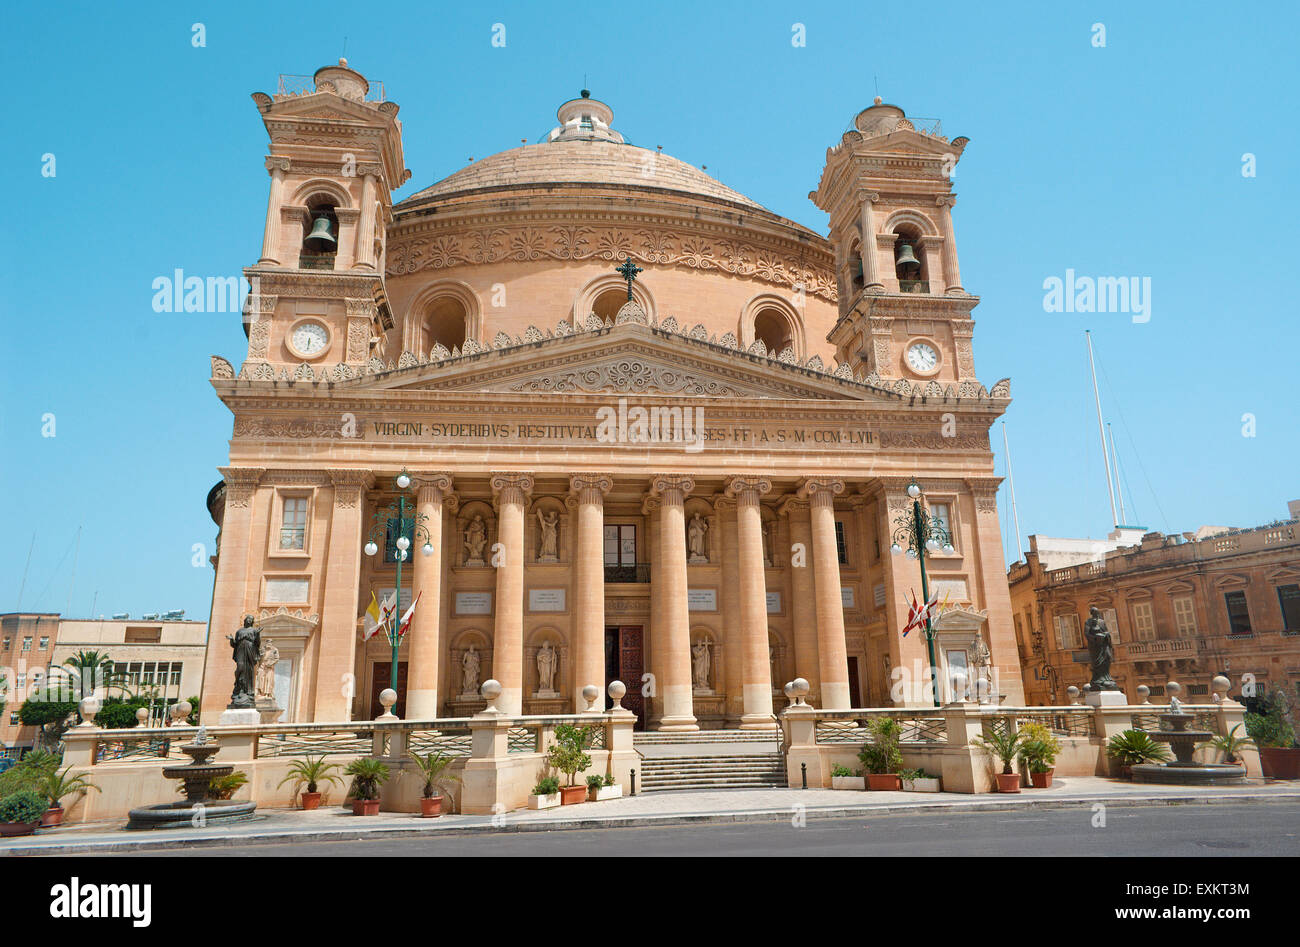 Malta - Rotunda of Mosta (Rotunda of St Marija Assunta) wih the third-largest church dome in Europe (40 meters in diameter). Stock Photo